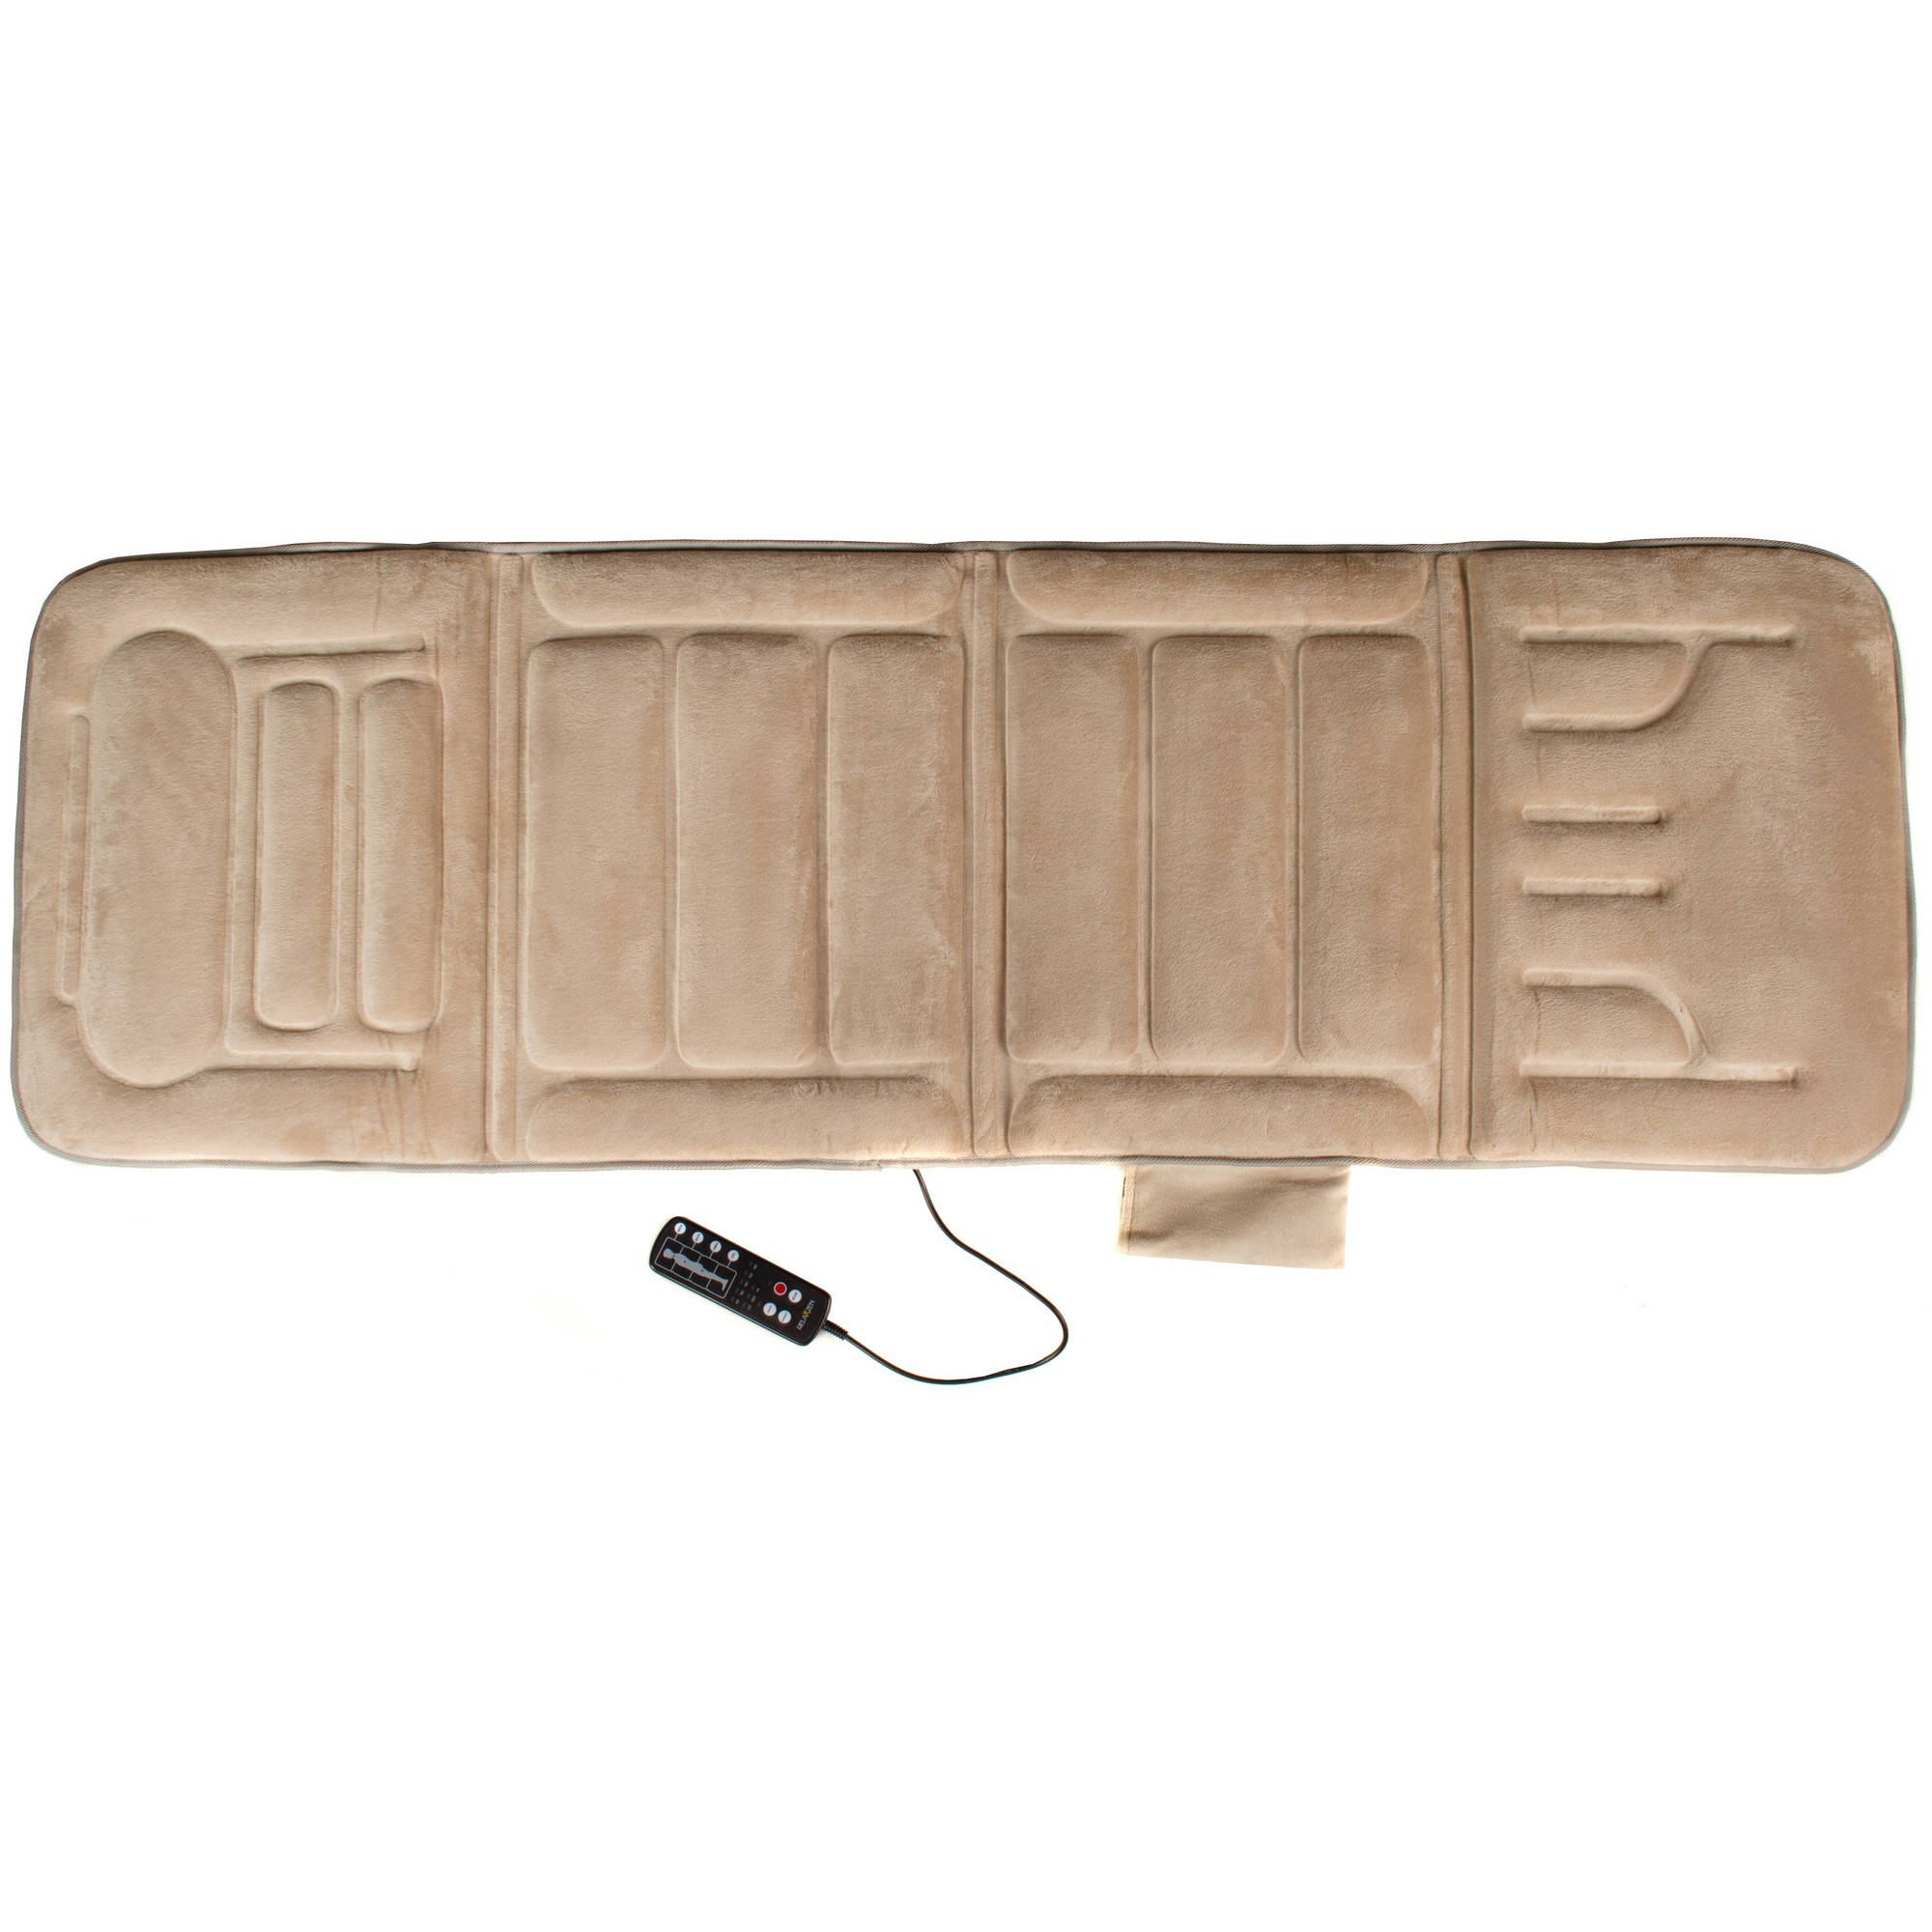 Relaxzen 10-Motor Seat Cushion Massager Mat w/ Heat, Beige - image 2 of 3